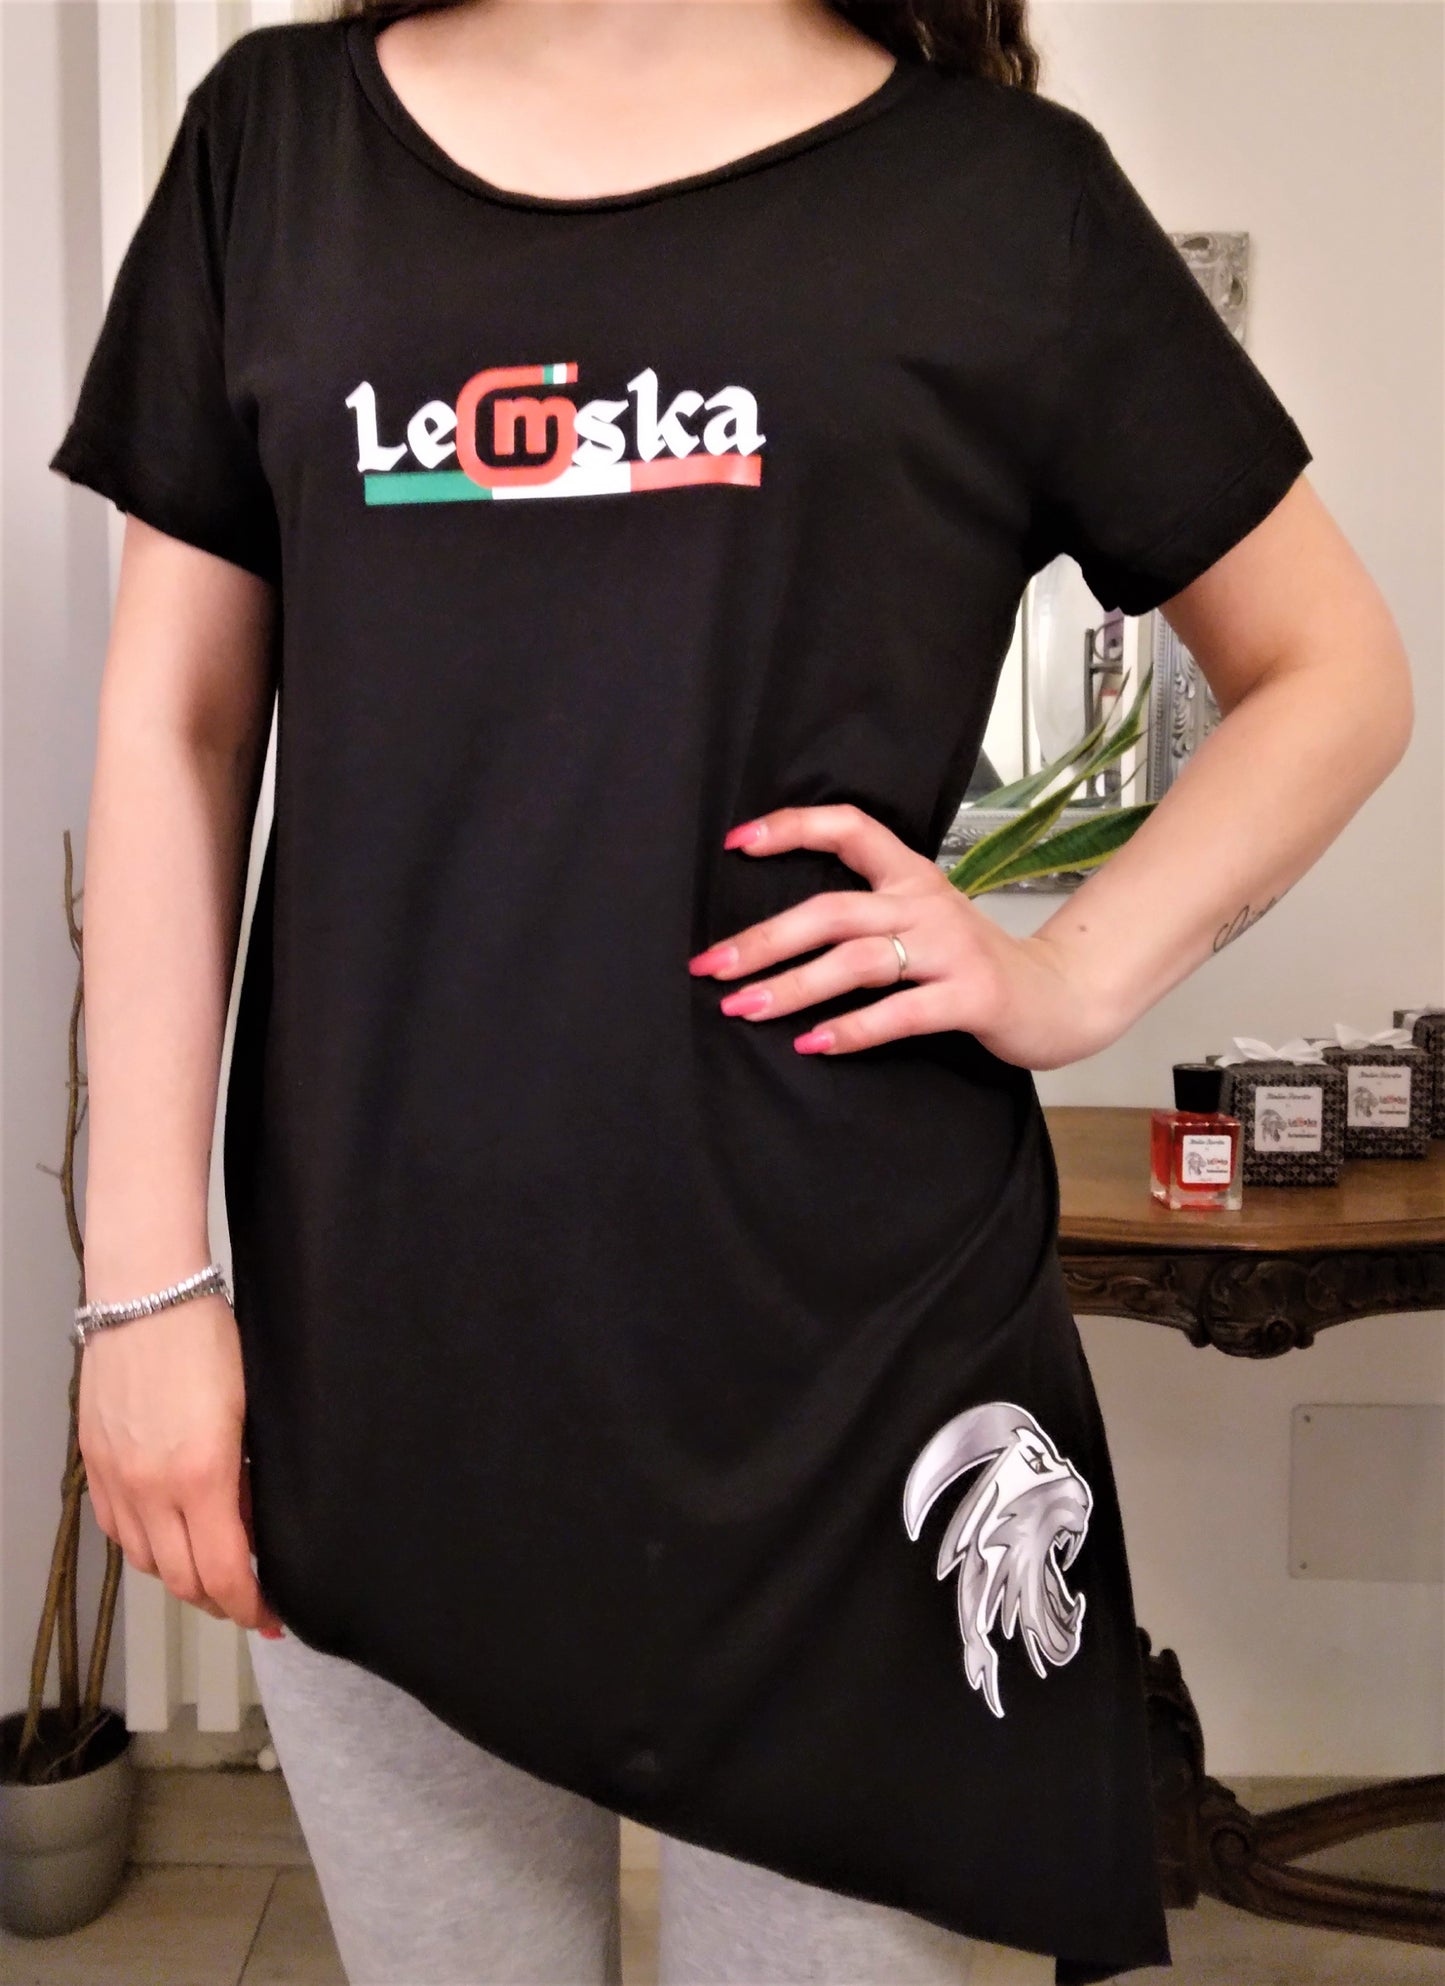 Maglia asimmetrica donna Leomska 100% Made in Italy